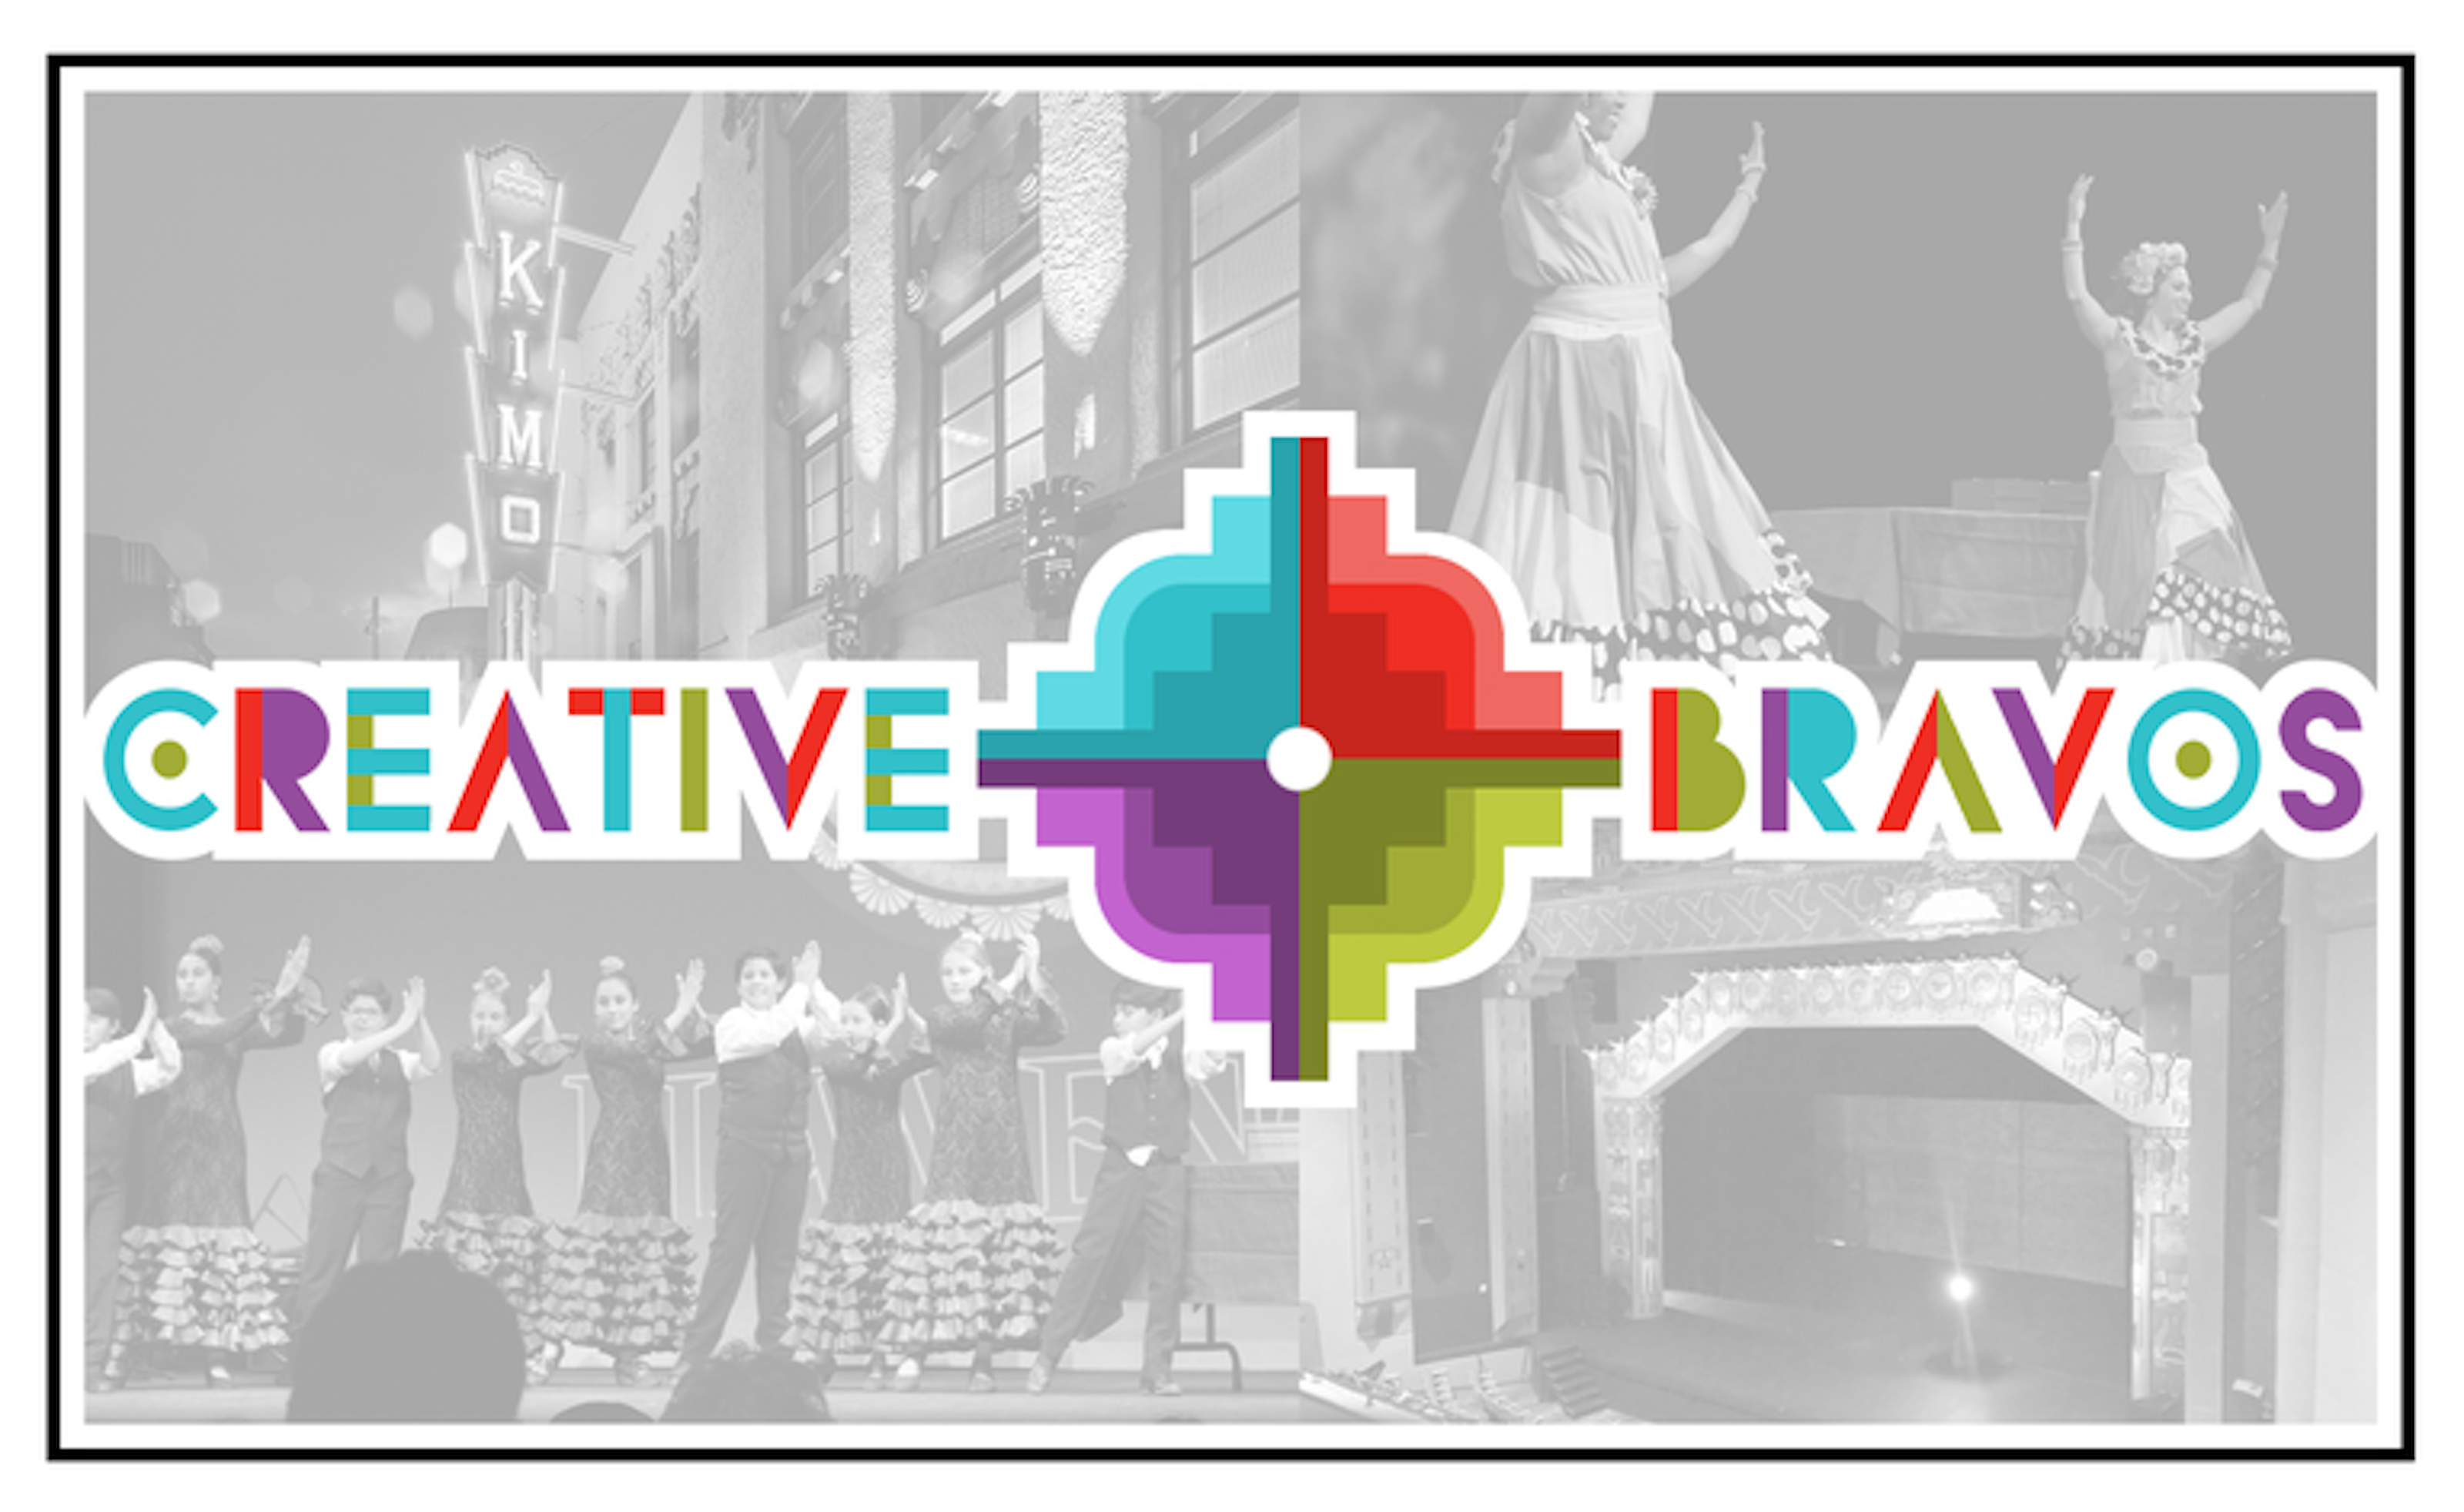 Creative Bravos Award